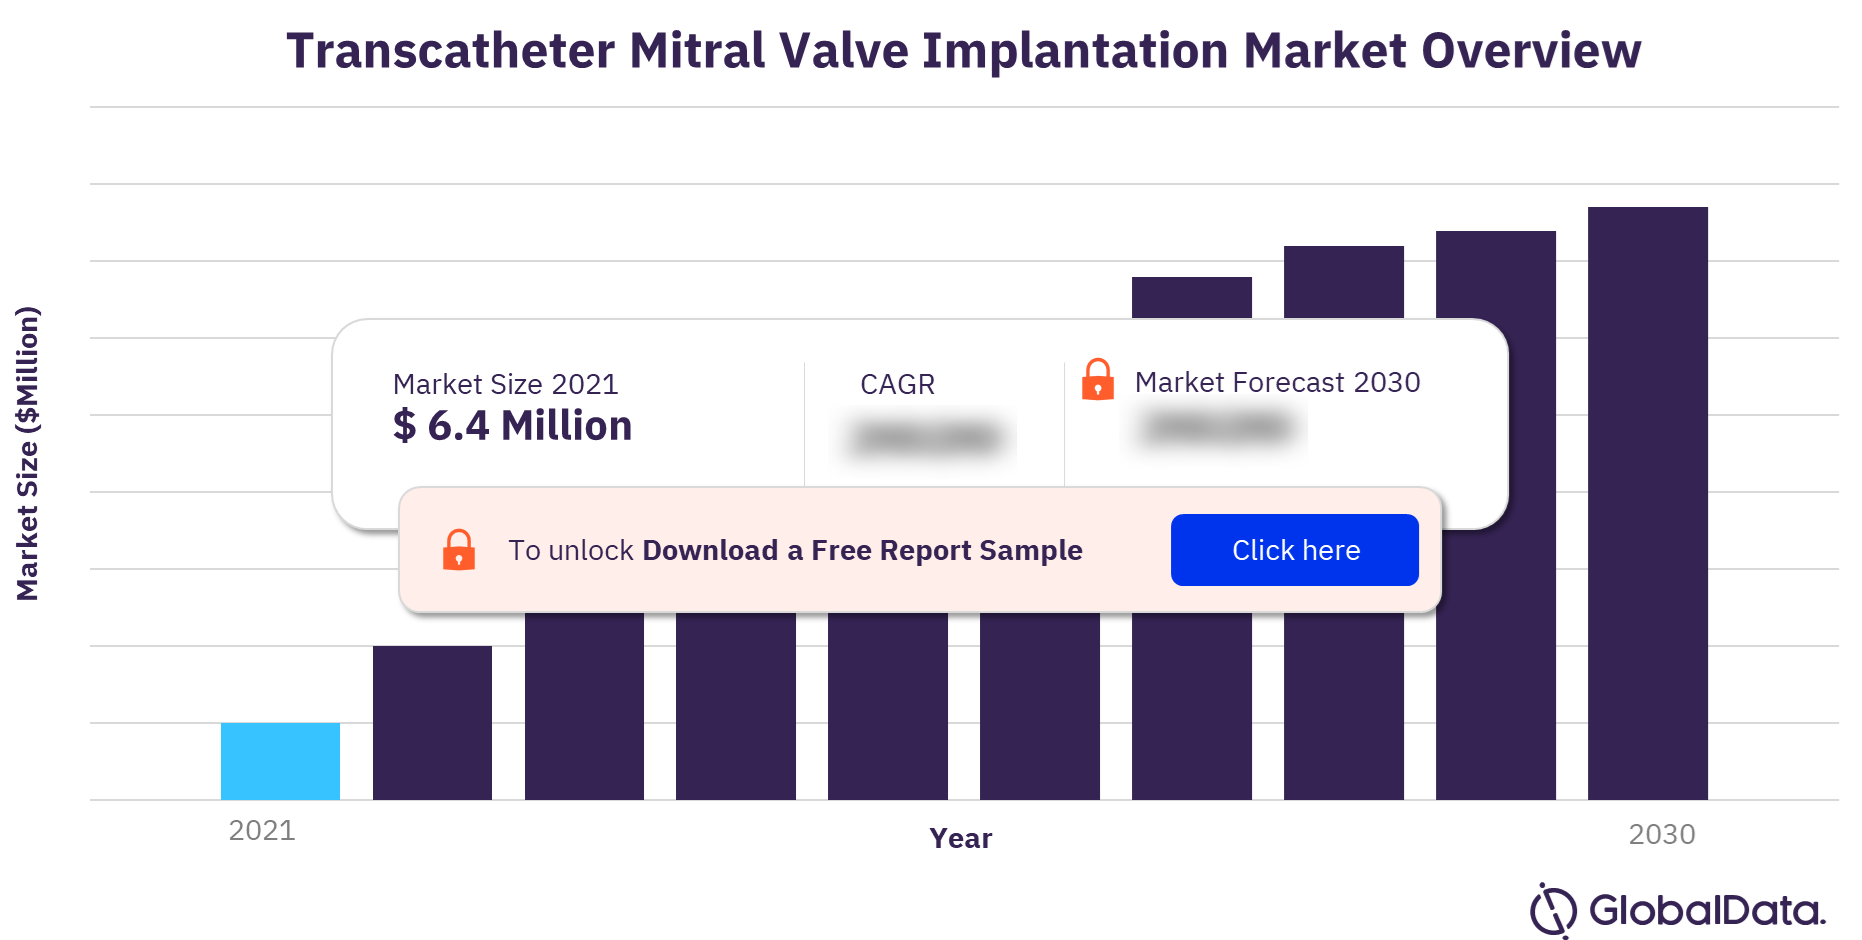 Transcatheter mitral valve implantation market overview